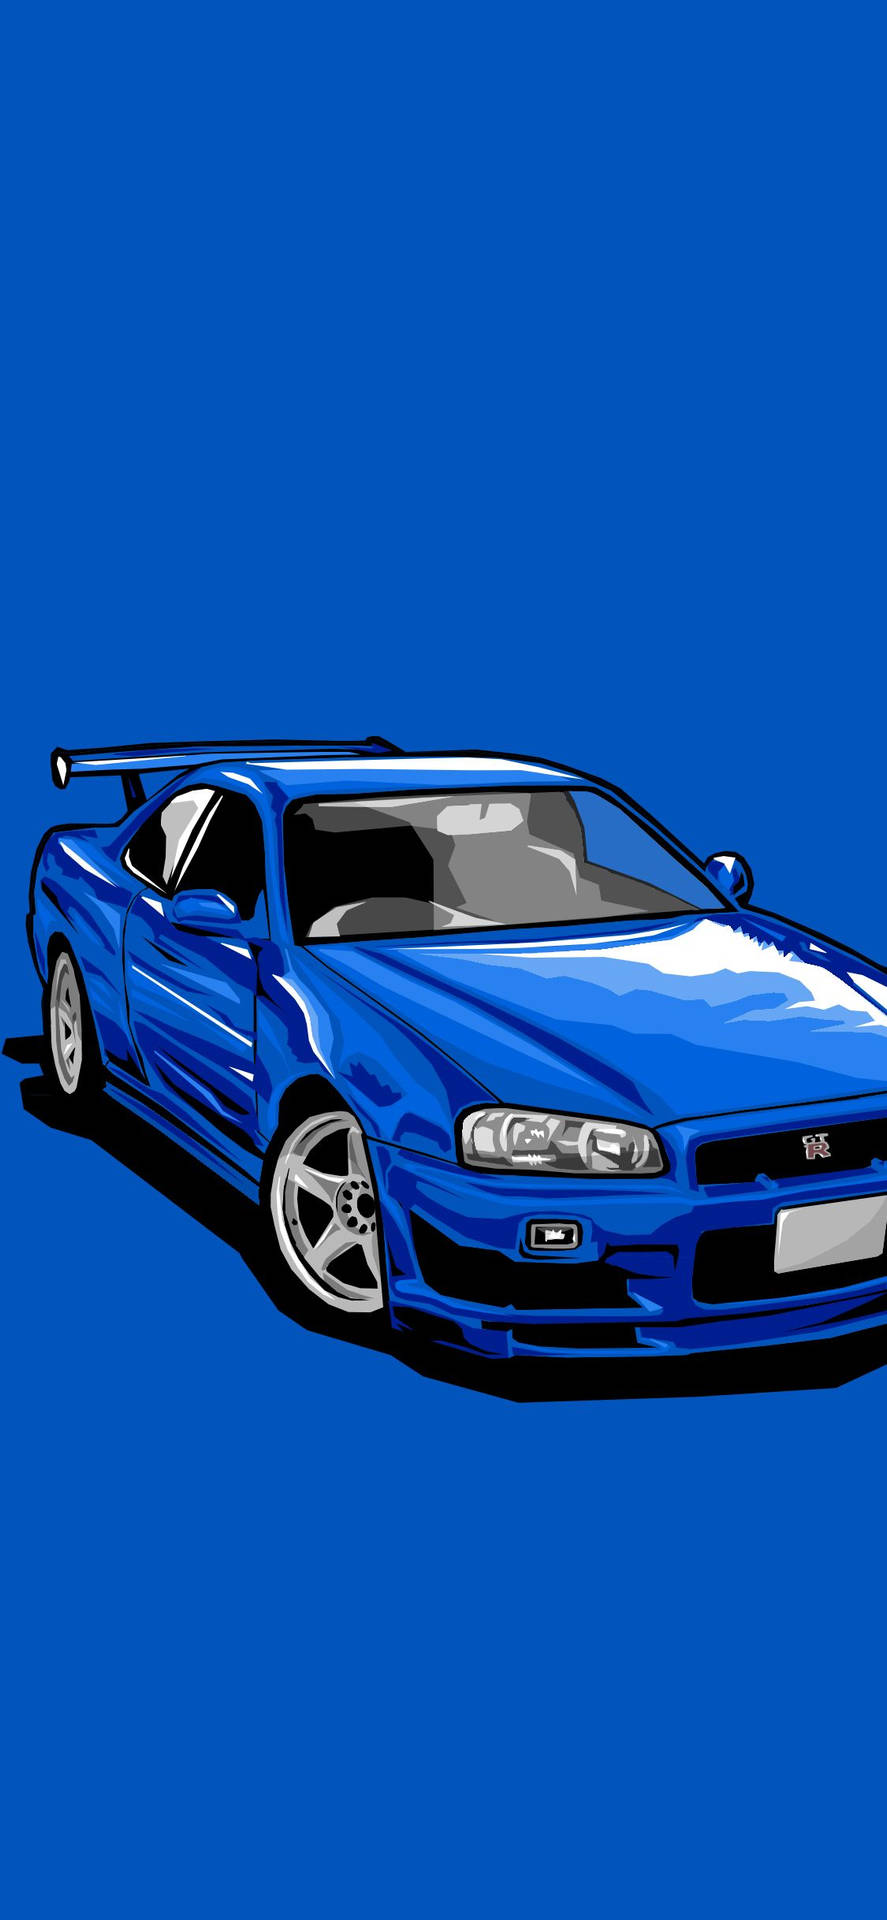 Iphone X Car Blue Nissan Skyline Background